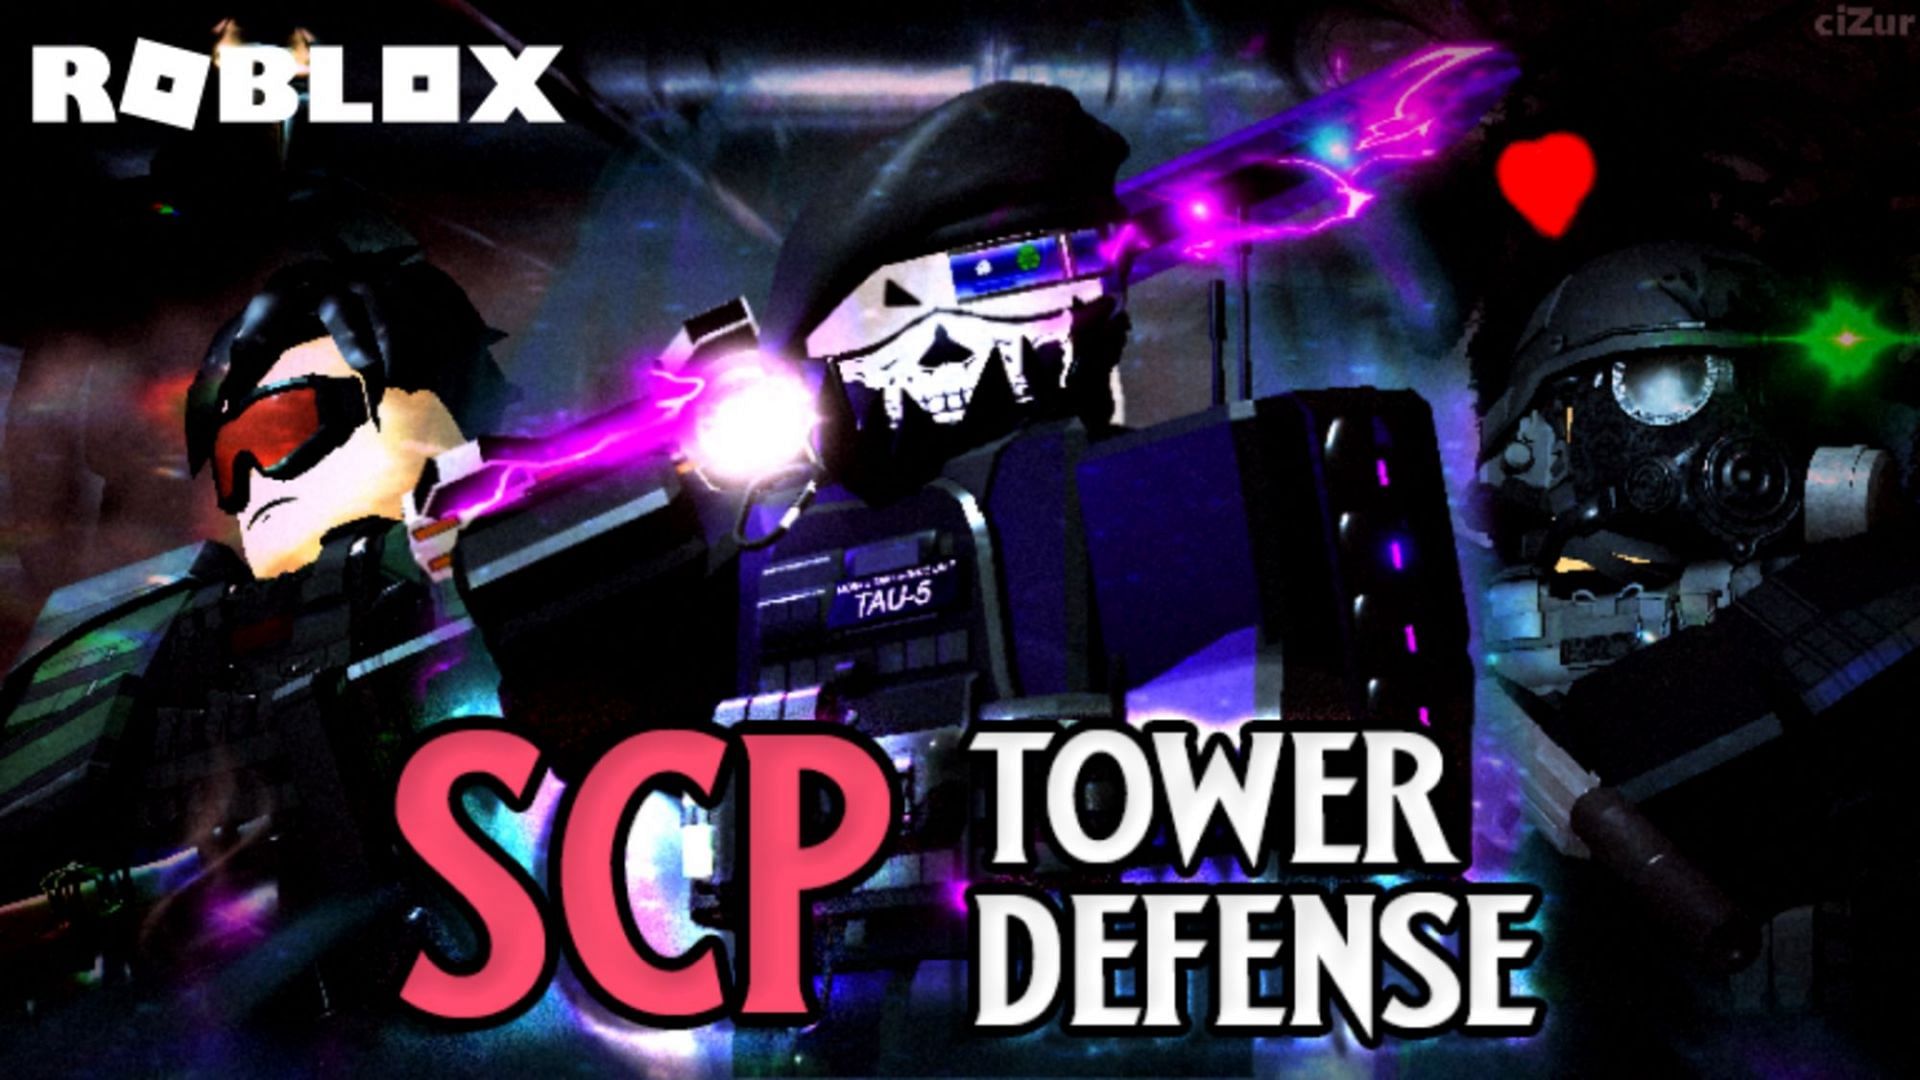 Roblox SCP Tower Defense codes to redeem free rewards (Image via Roblox)